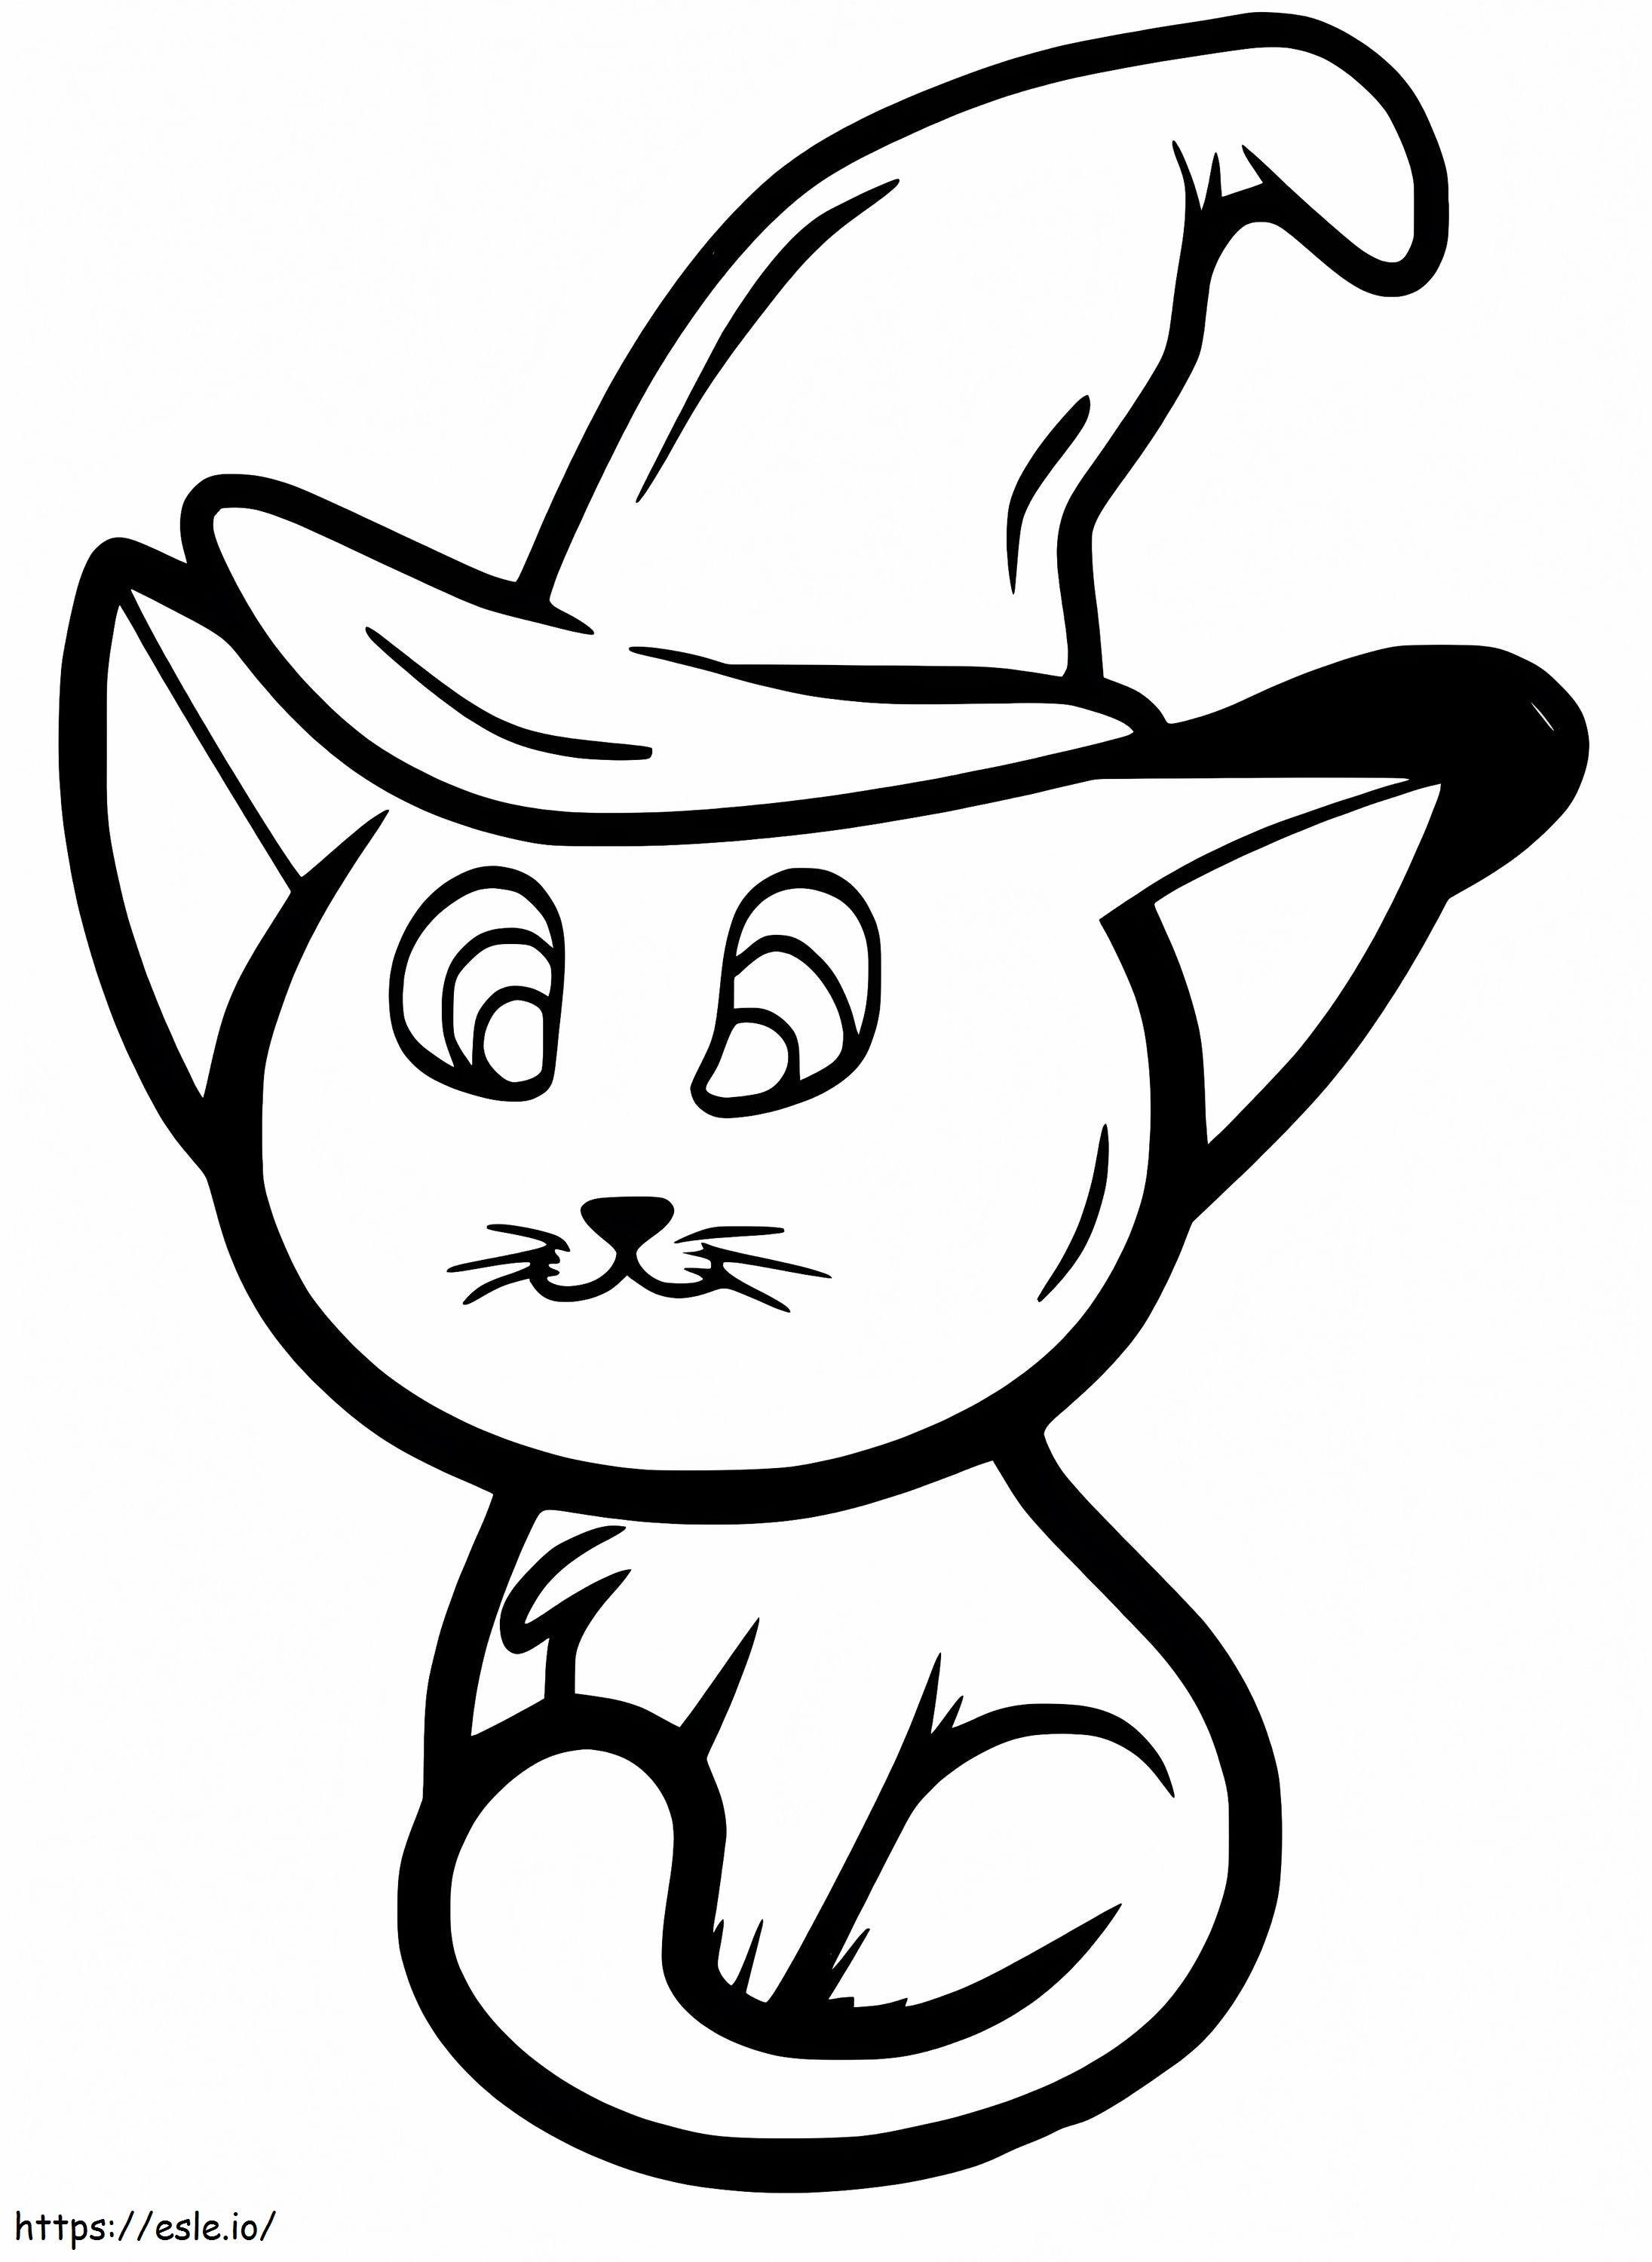 Gato con sombrero de bruja para colorear